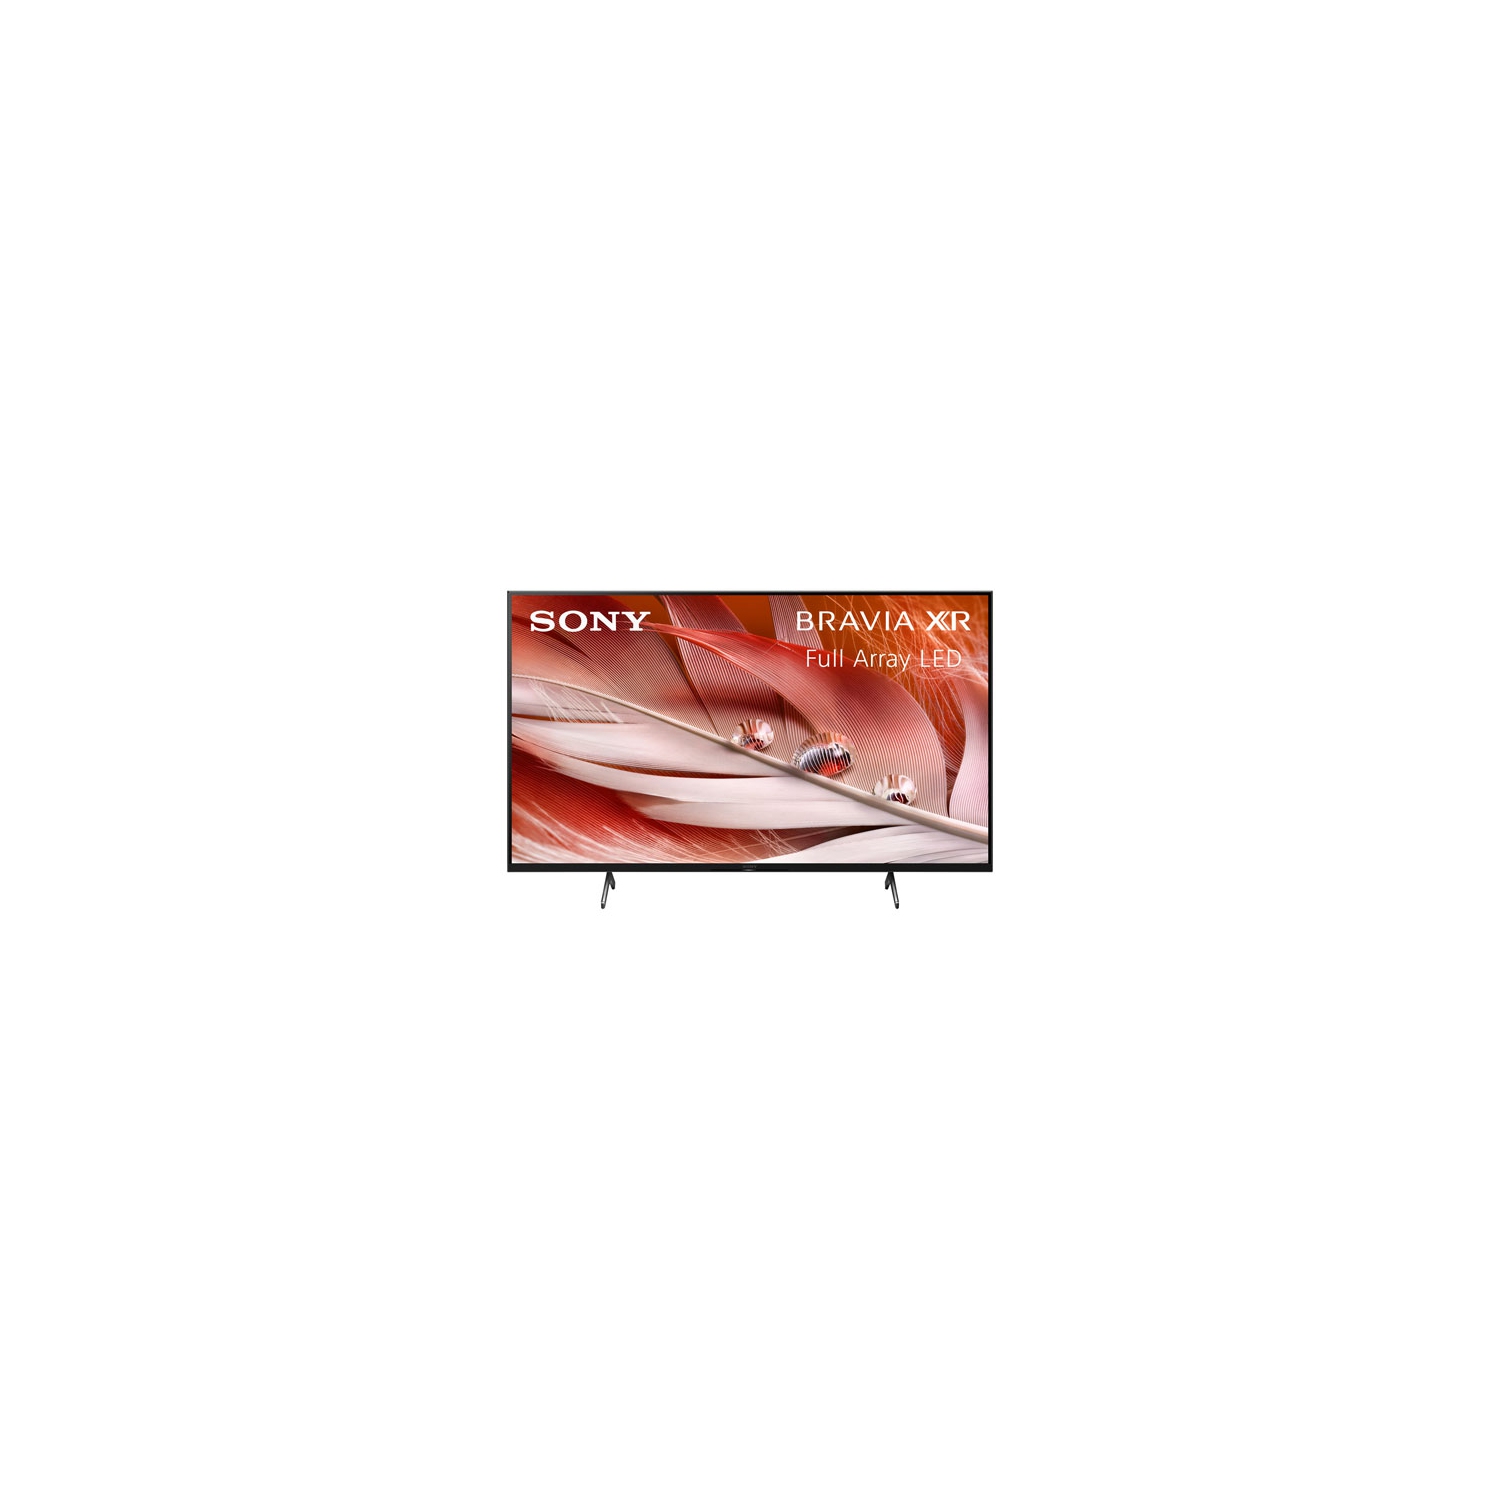 Sony BRAVIA XR 50" 4K UHD HDR LED Google Smart TV (XR50X90J) - 2021- Refurbished